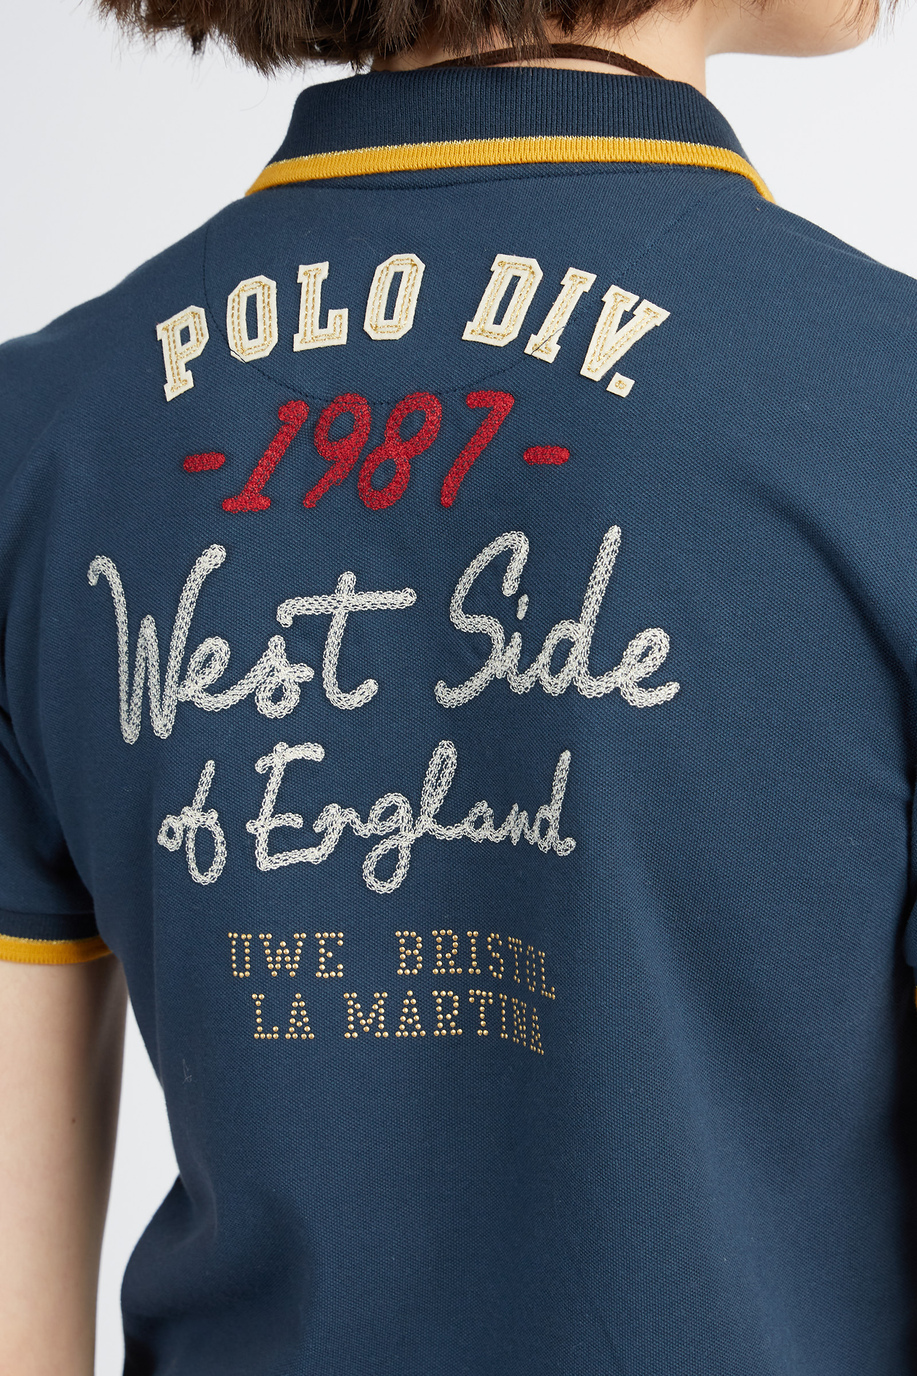 Kurzärmliges Damen-Poloshirt mit Pailletten-Logo und Polo Academy-Patch - Varka - Poloshirts | La Martina - Official Online Shop